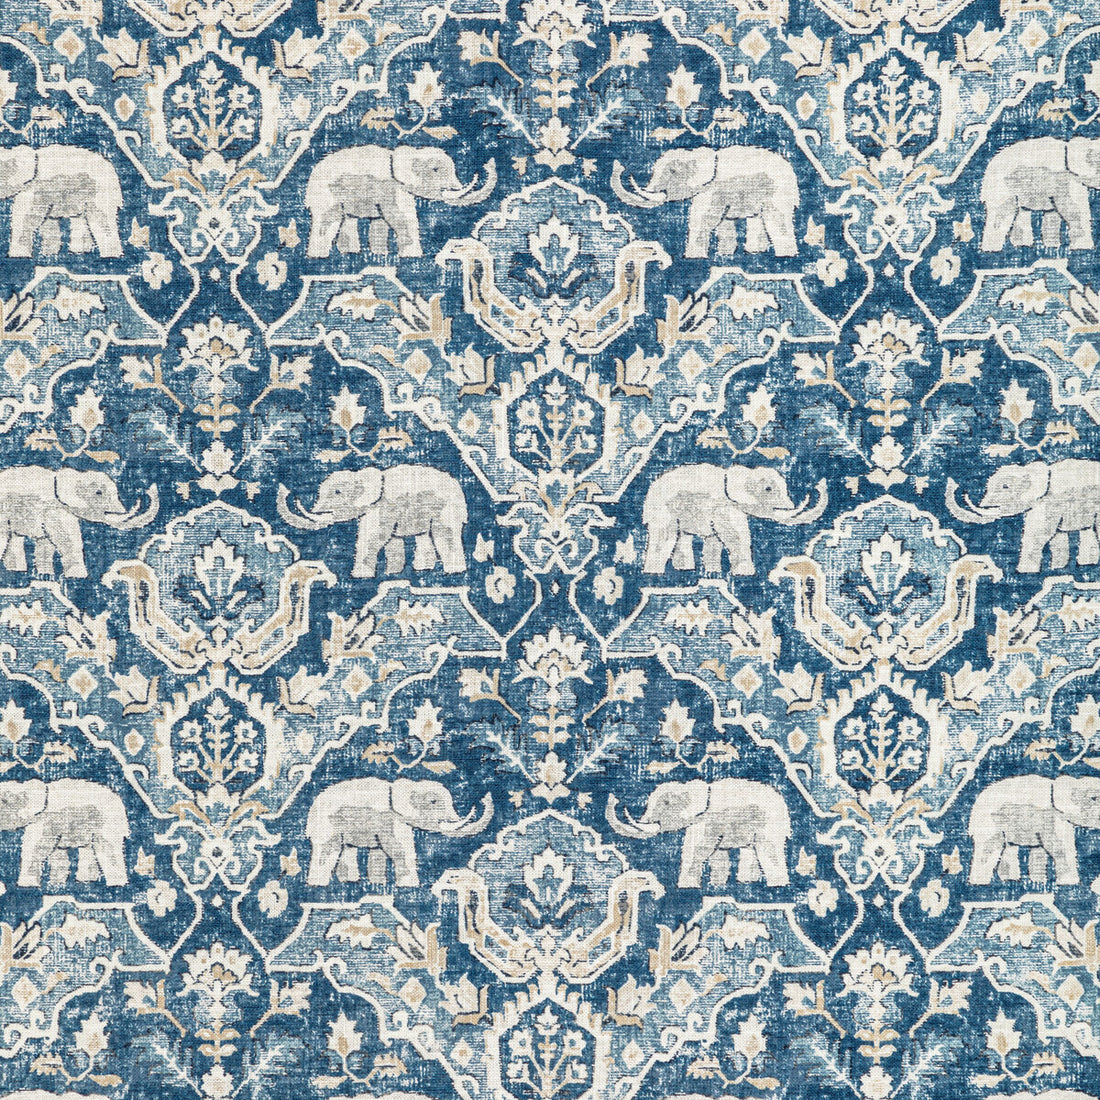 Kravet Basics fabric in cotus-516 color - pattern COTUS.516.0 - by Kravet Basics